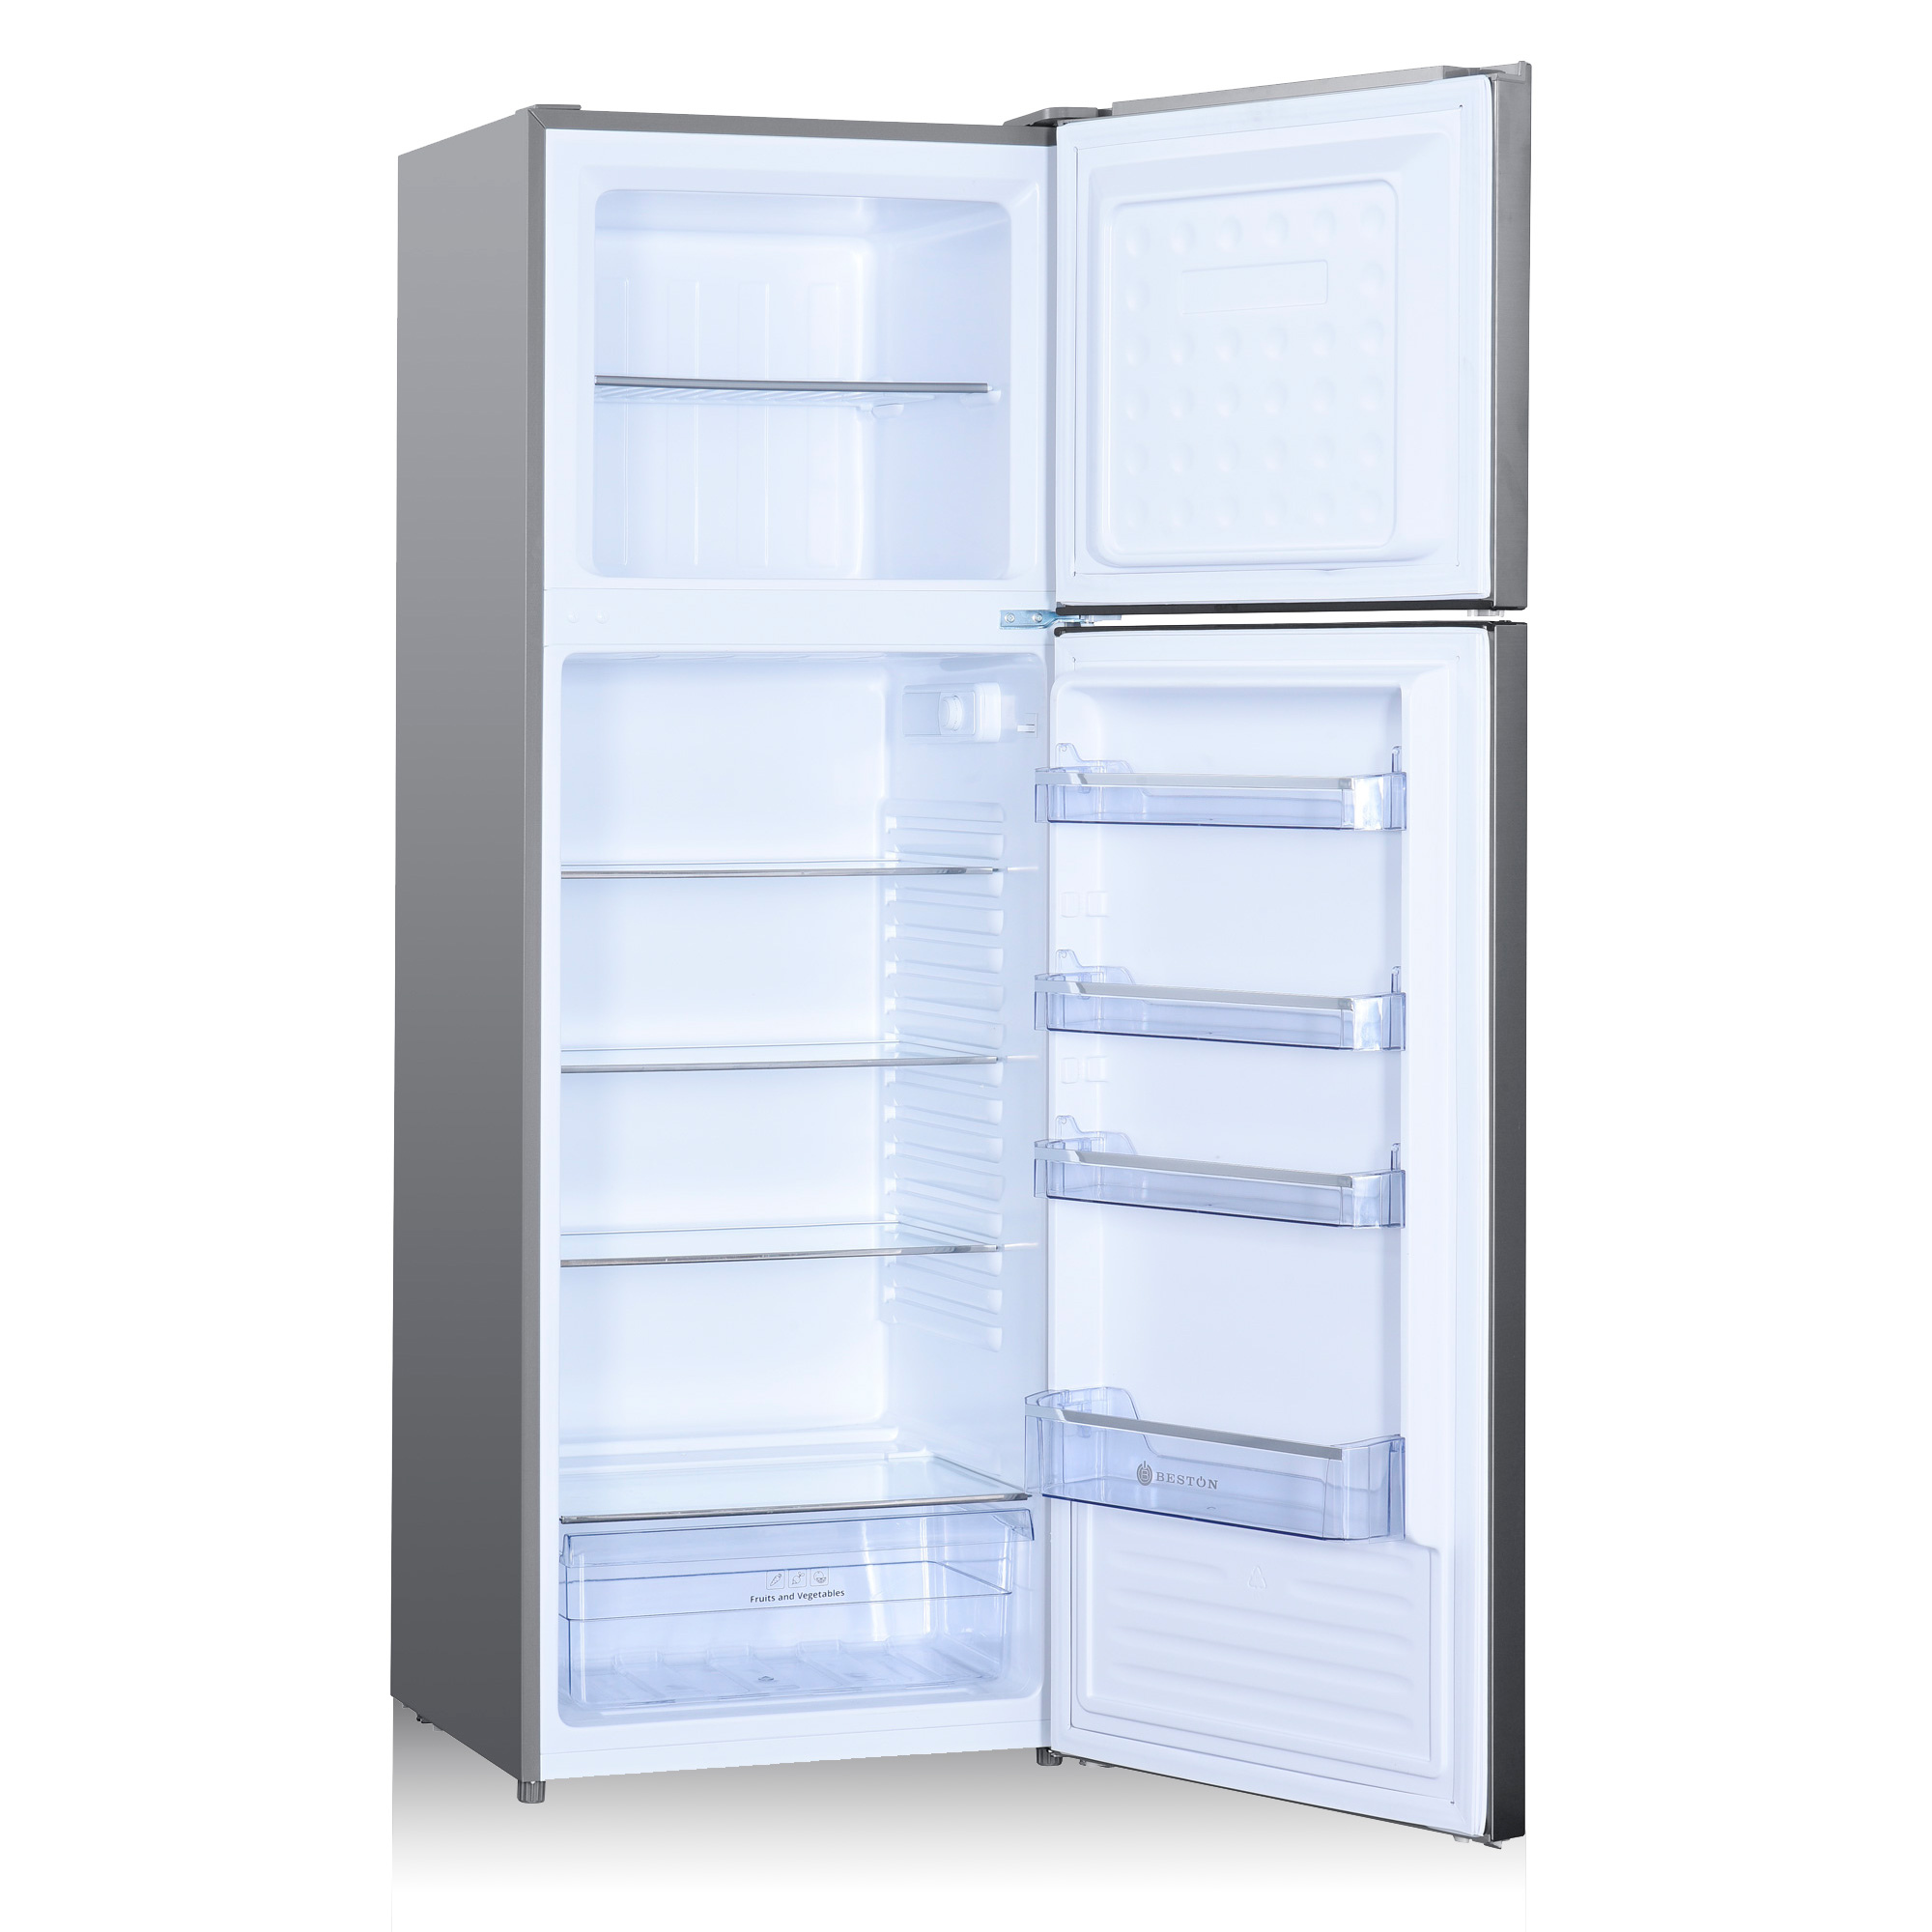 Холодильник Beston BD-455IN